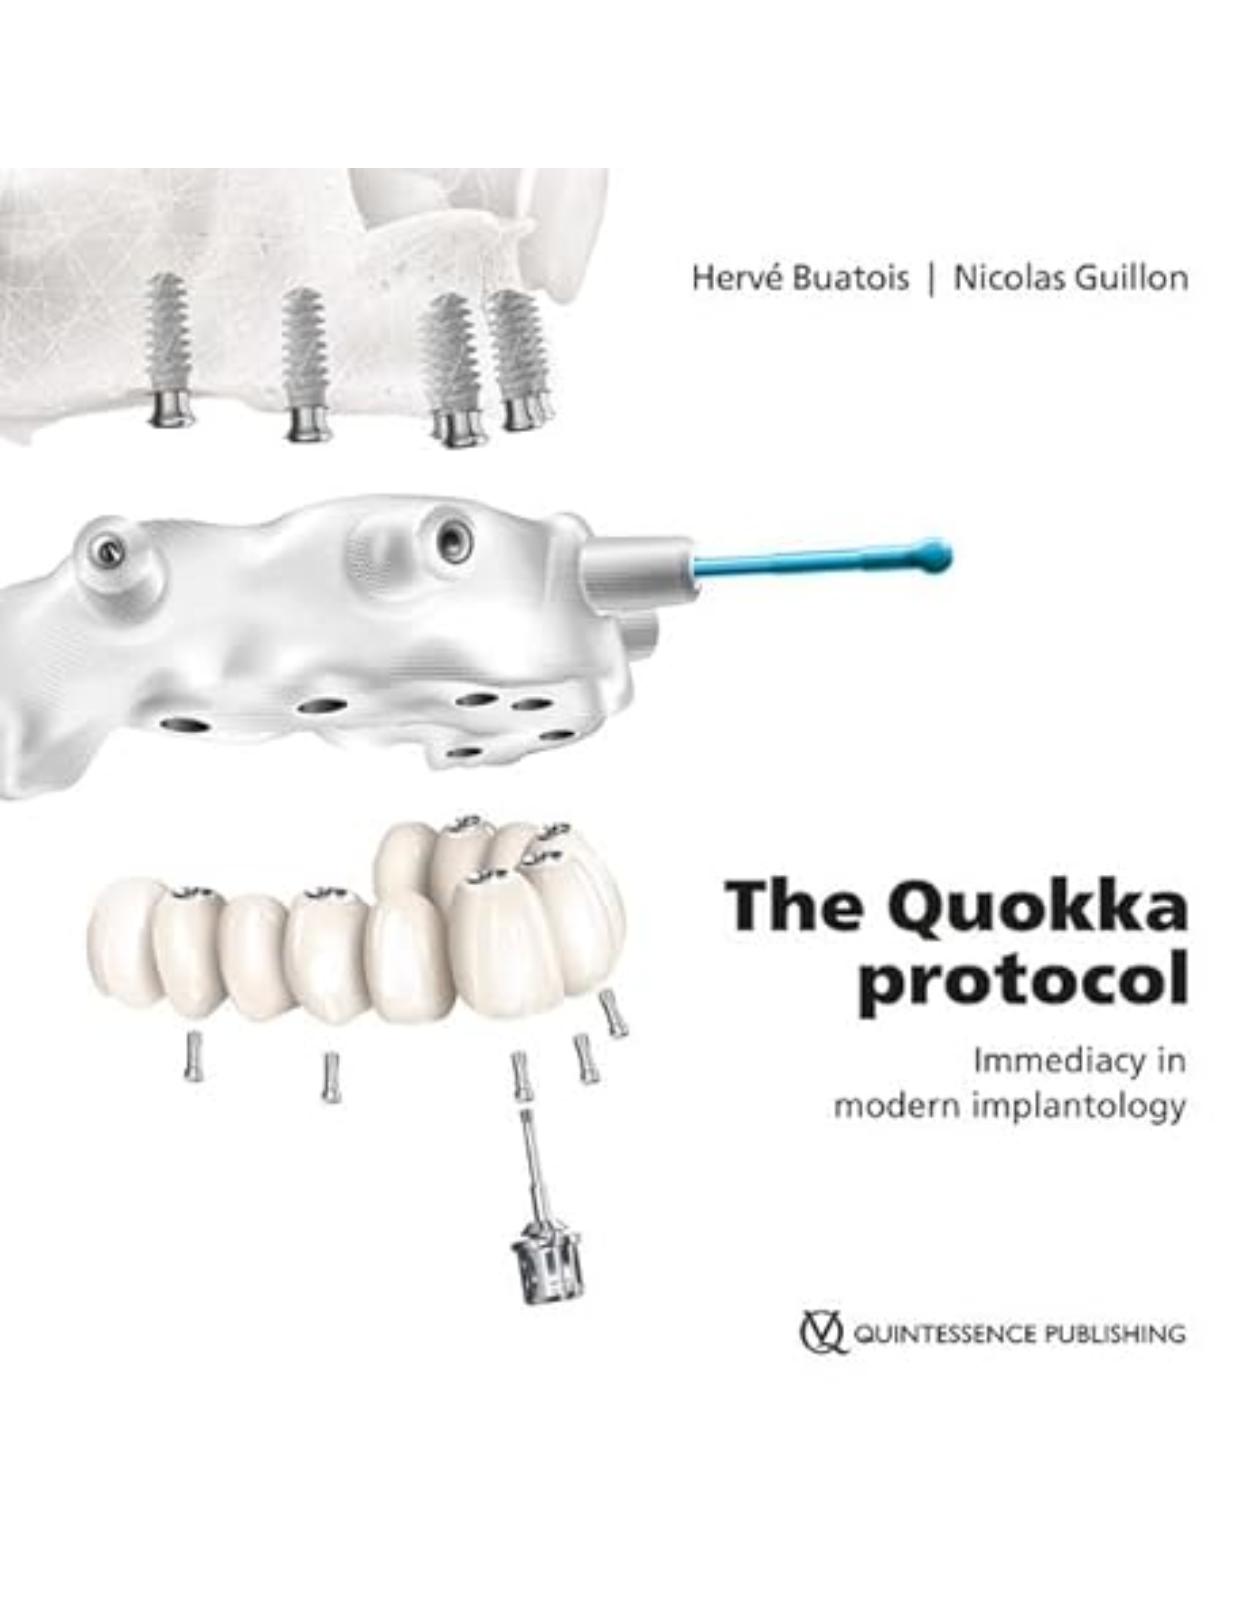 The Quokka protocol